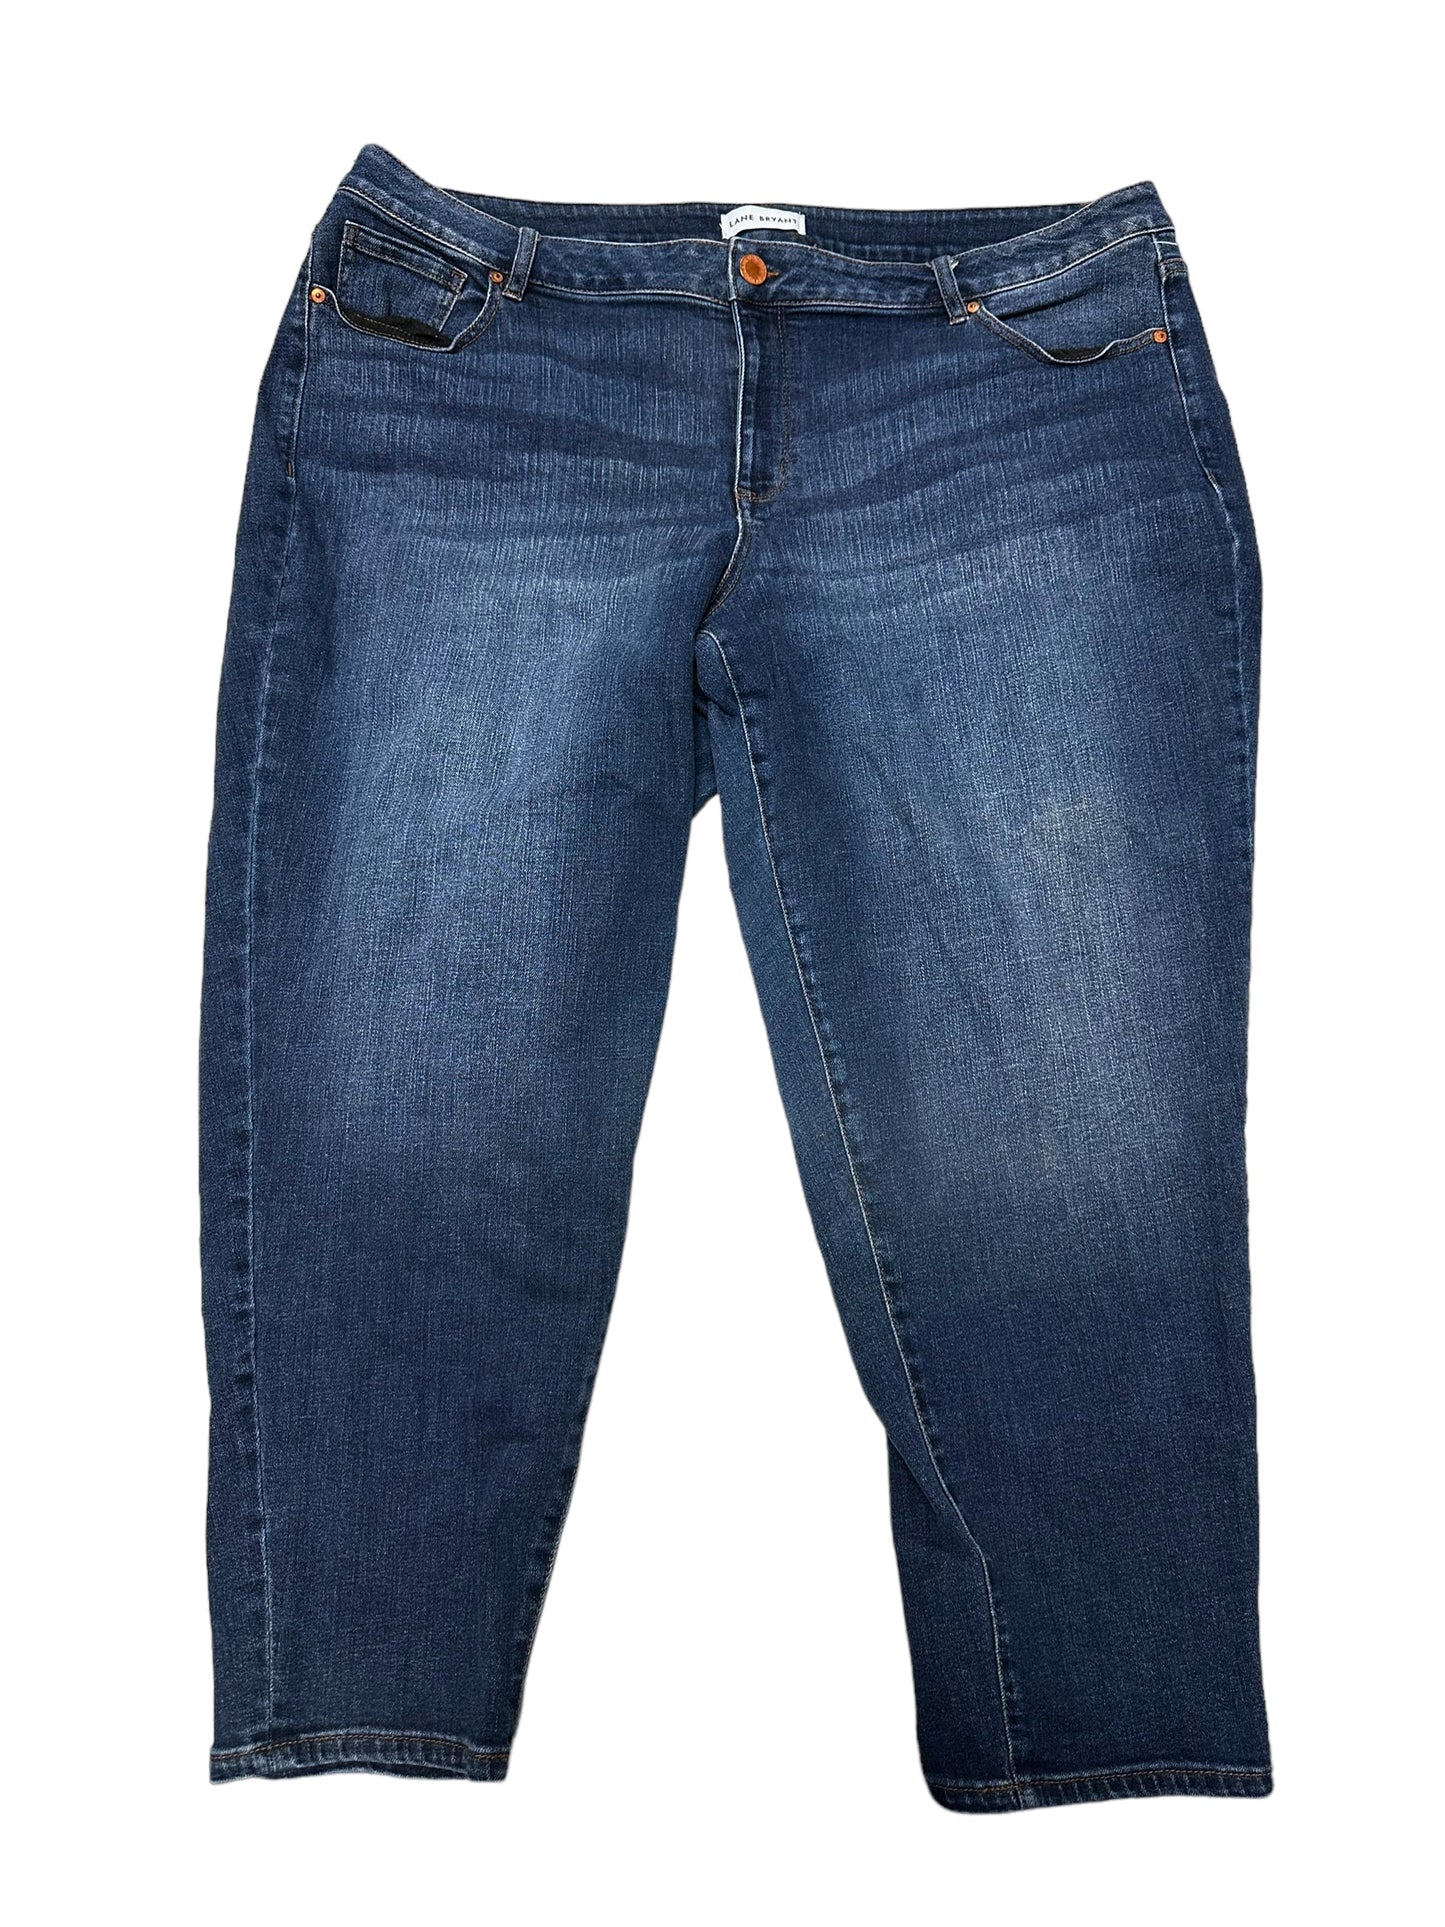 Jeans Skinny By Lane Bryant  Size: 22